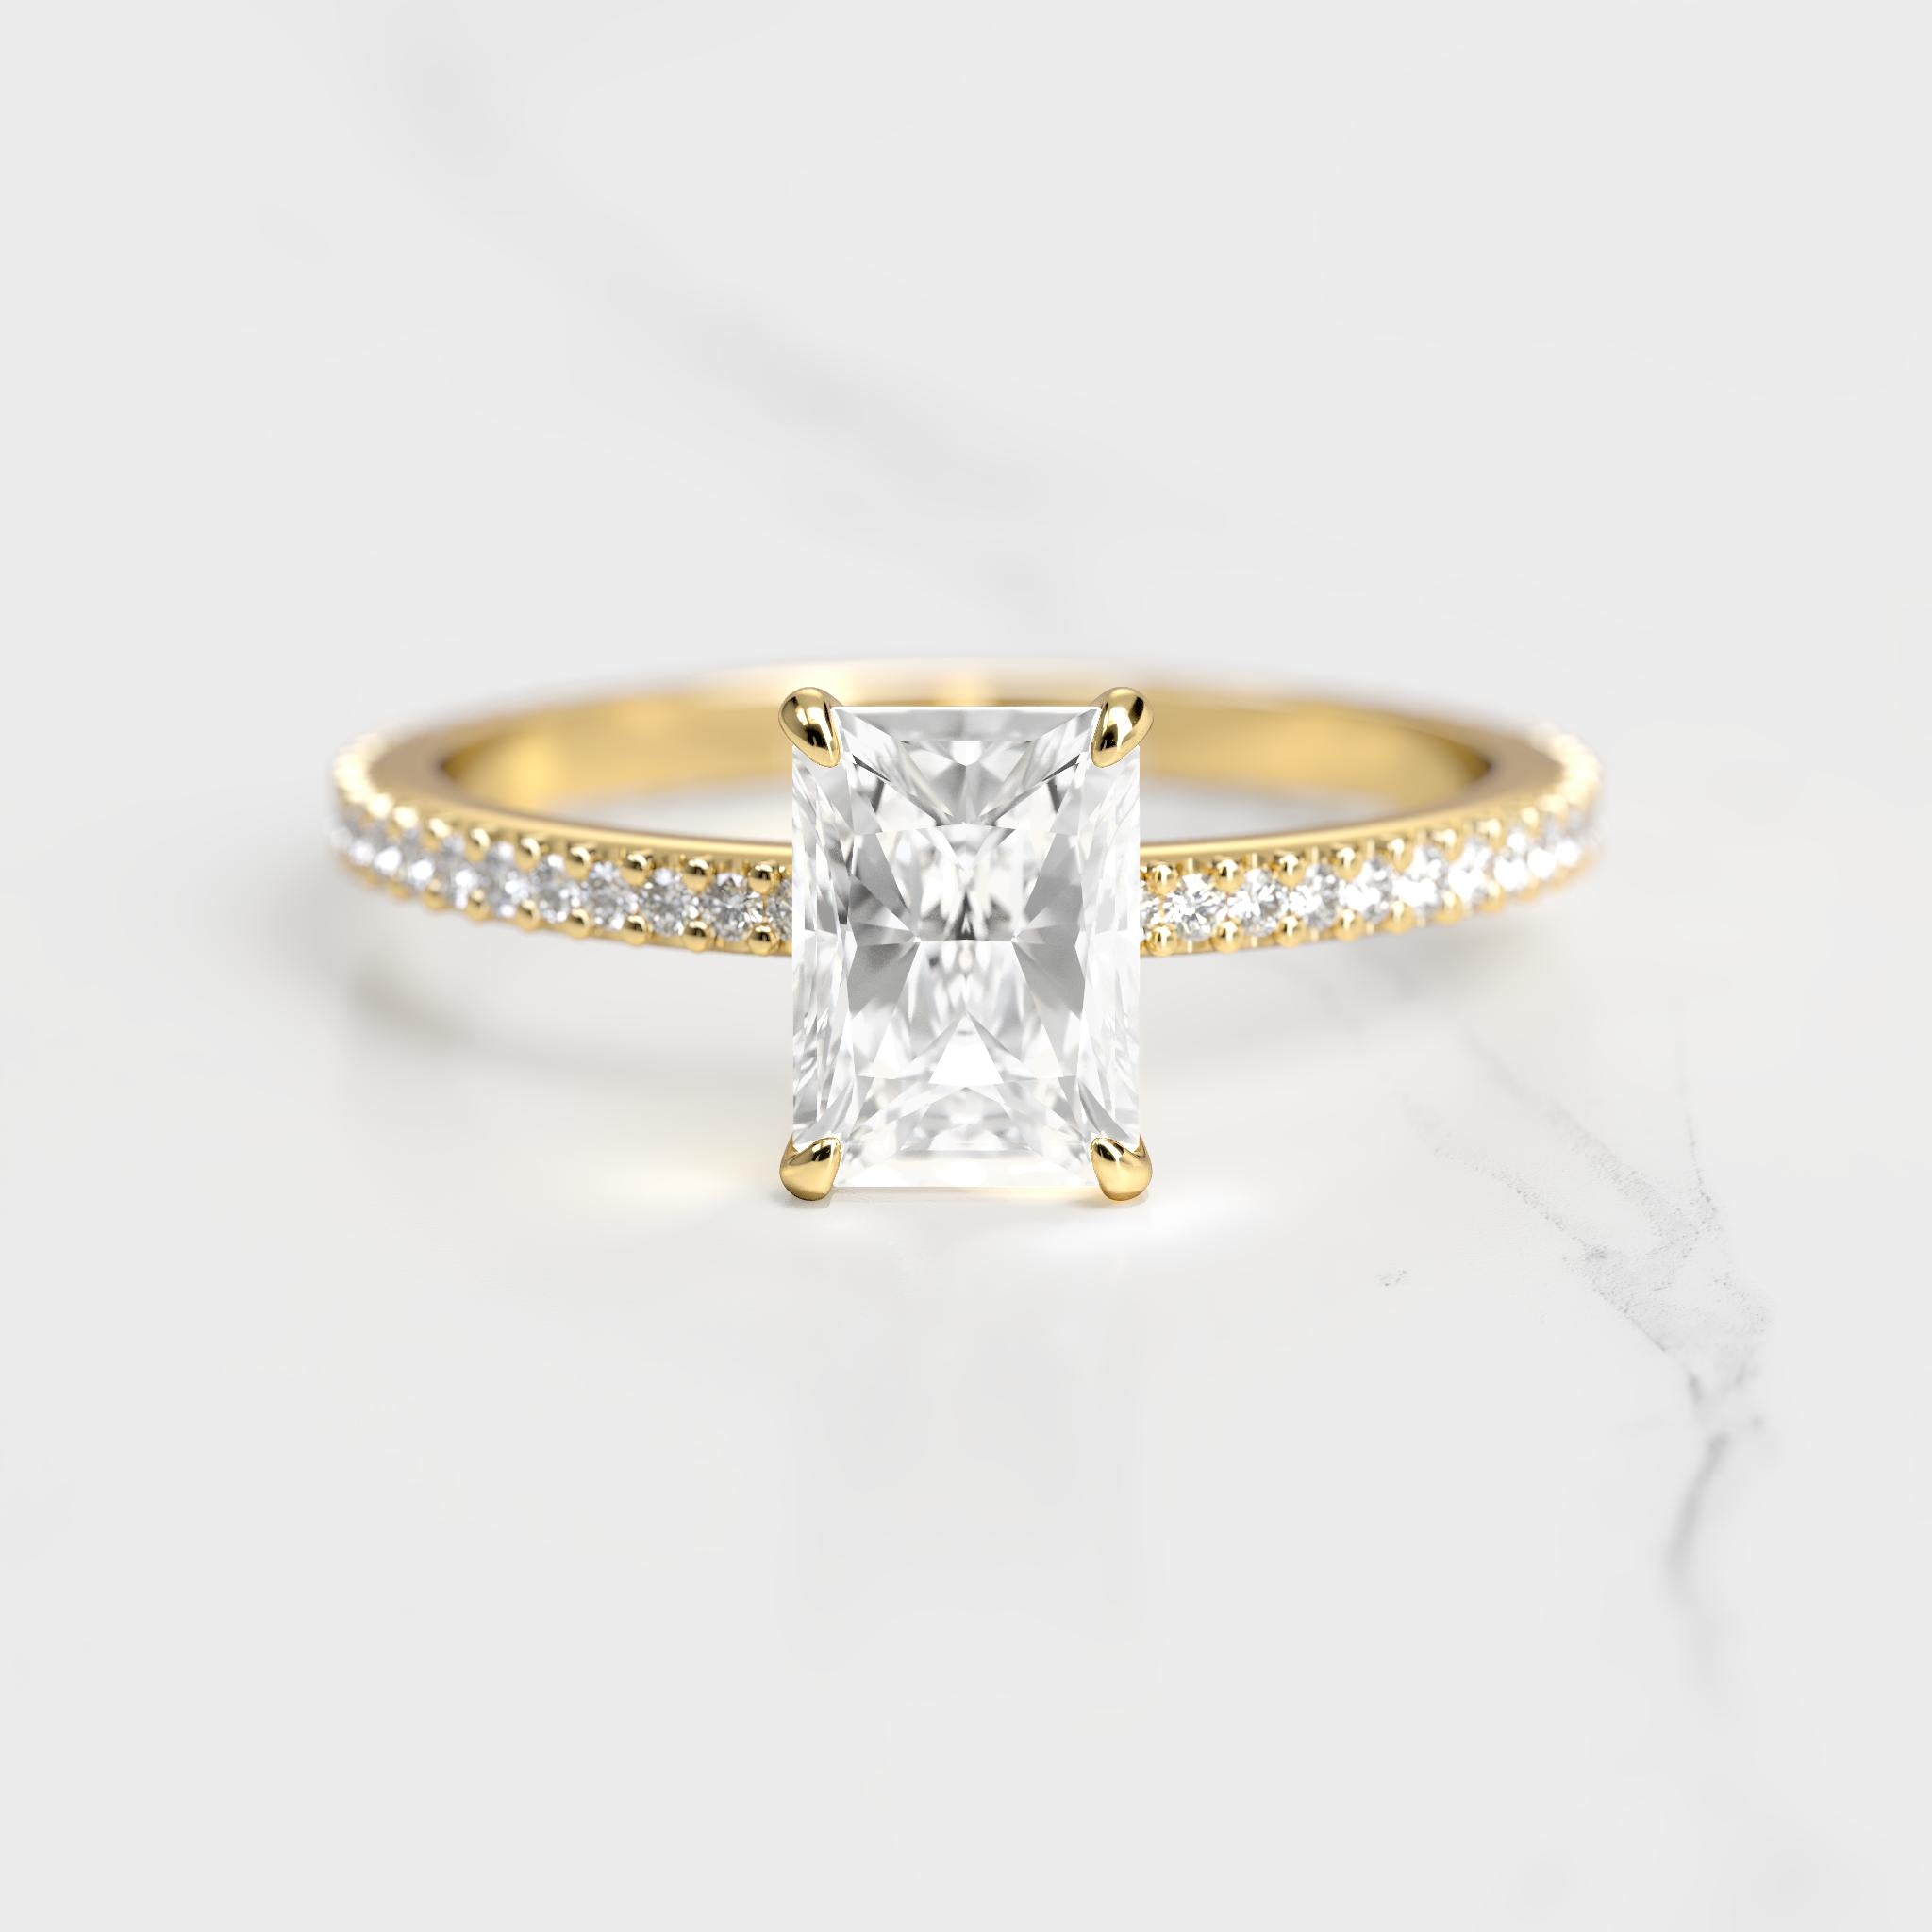 Radiant Half Pave Tapered Diamond Ring - 14k white gold / 0.5ct / natural diamond